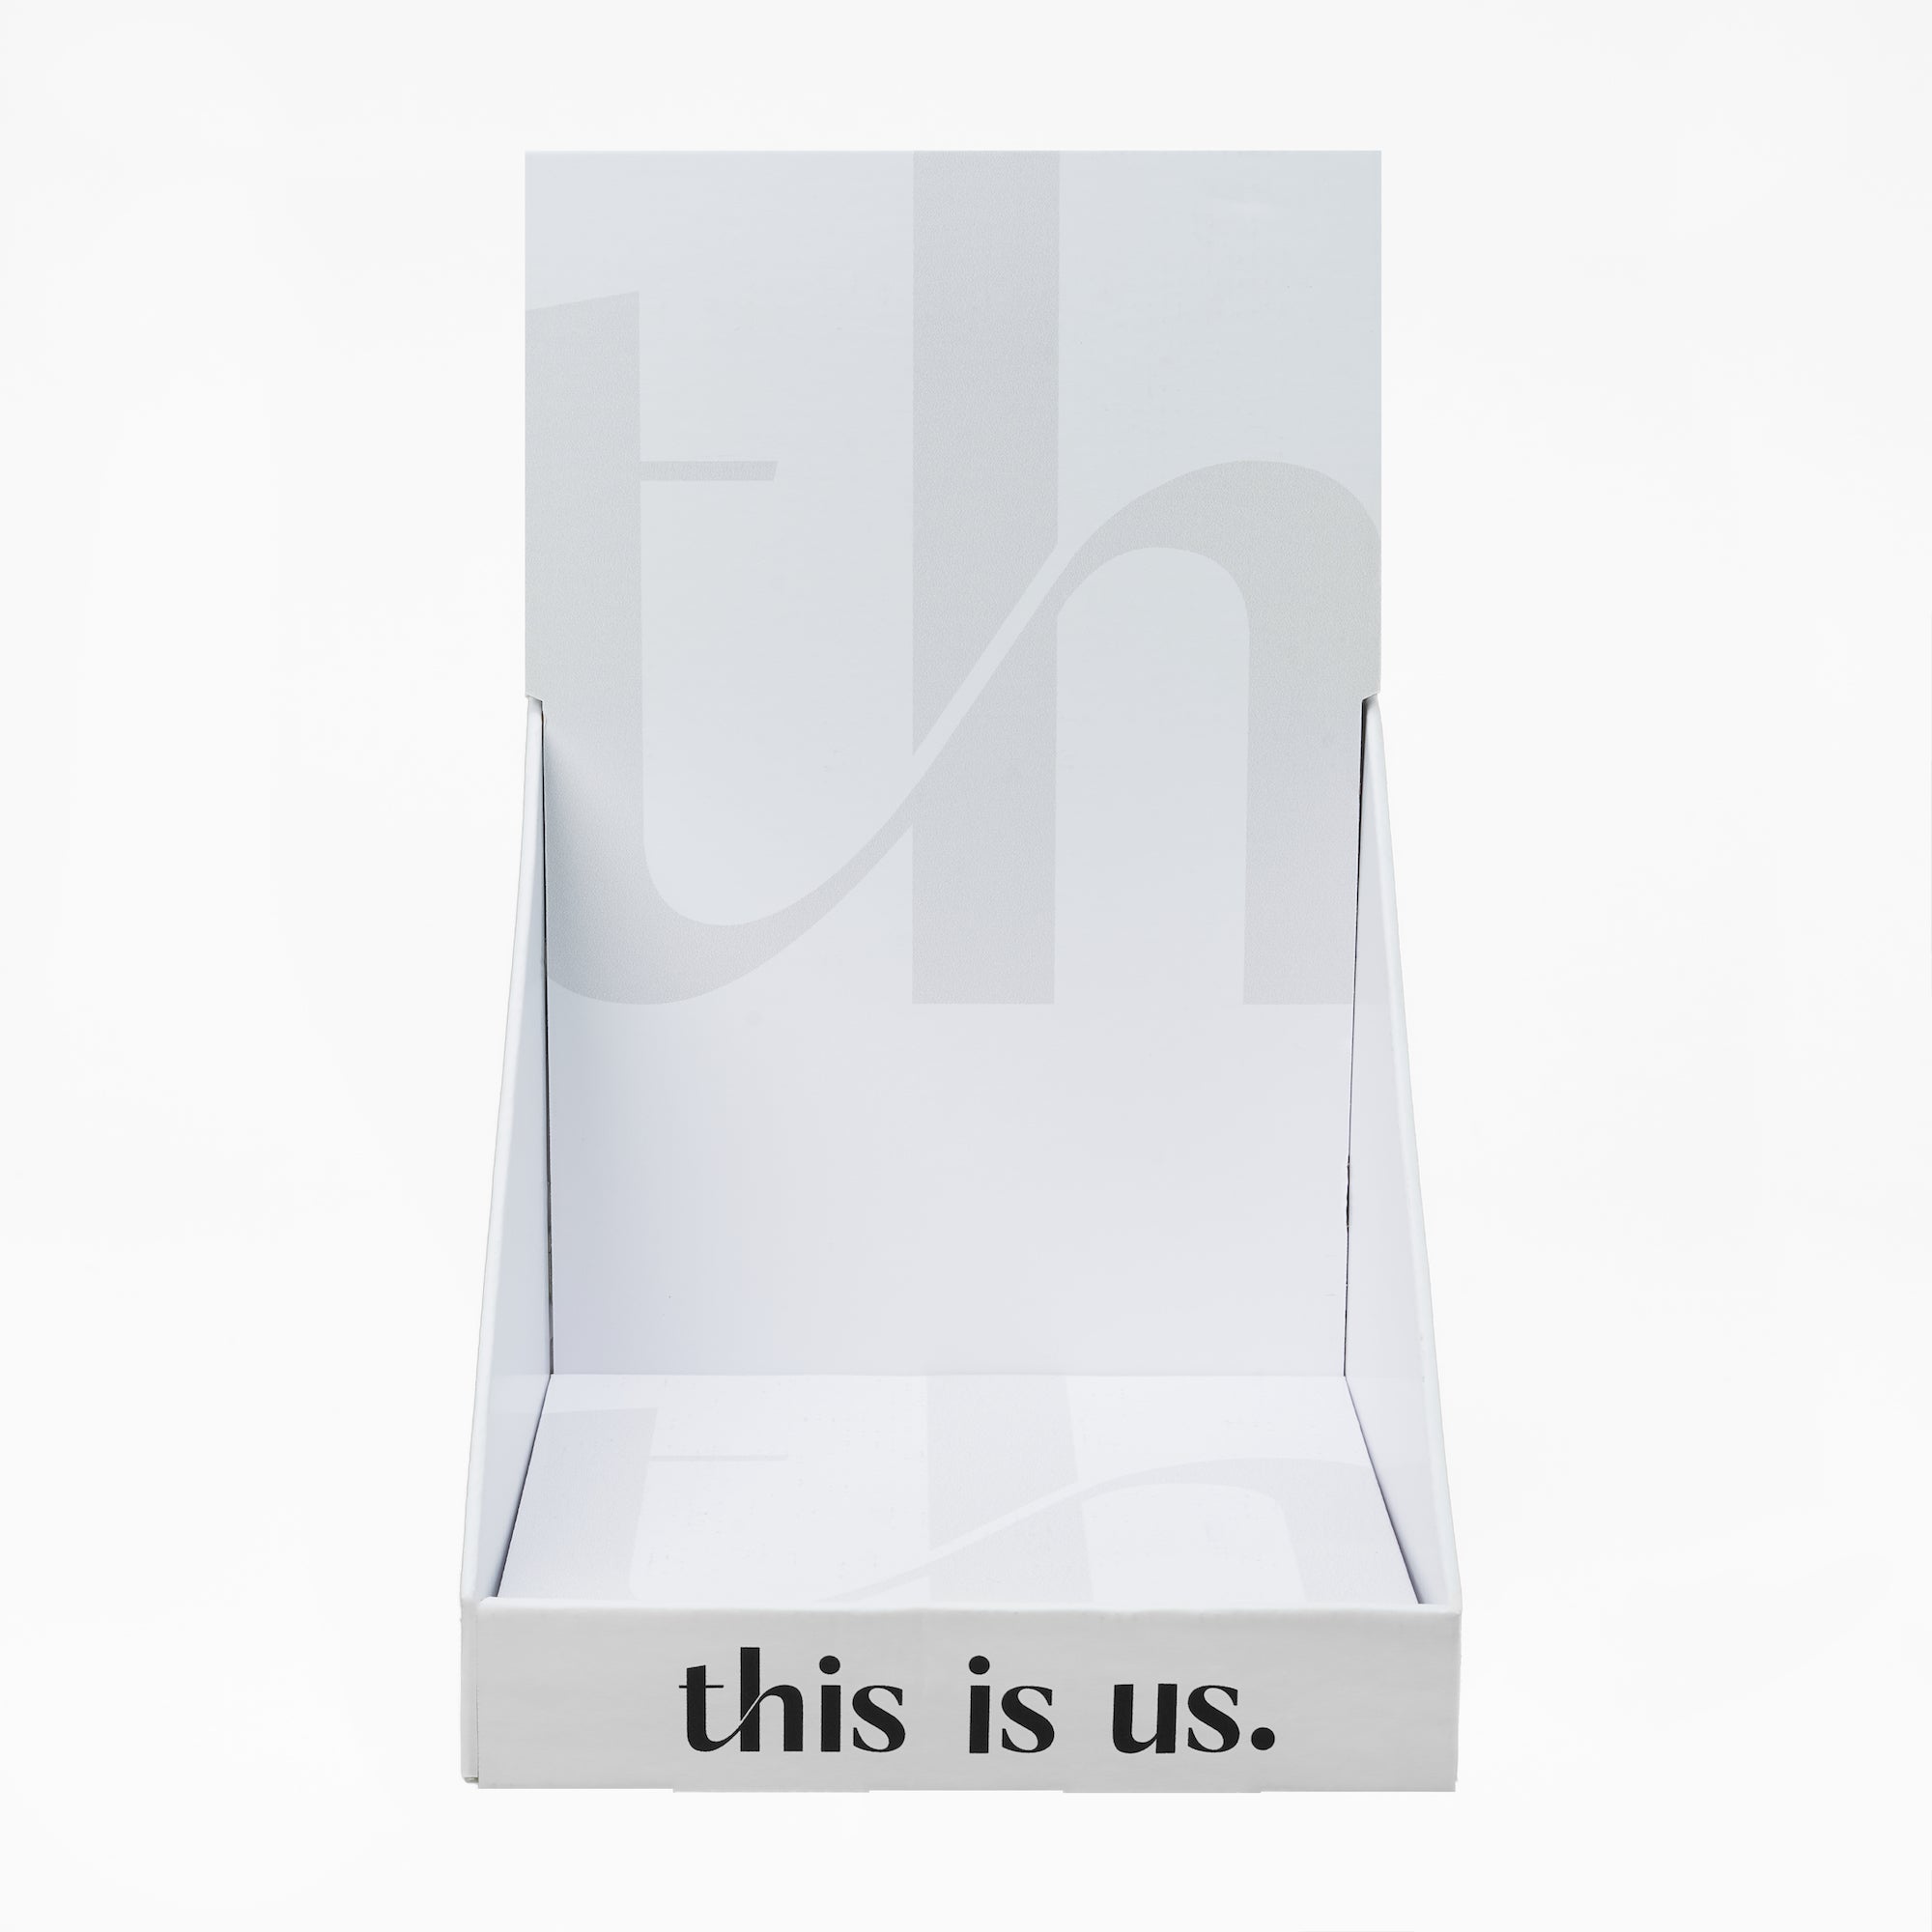 "this is us." | Universele display